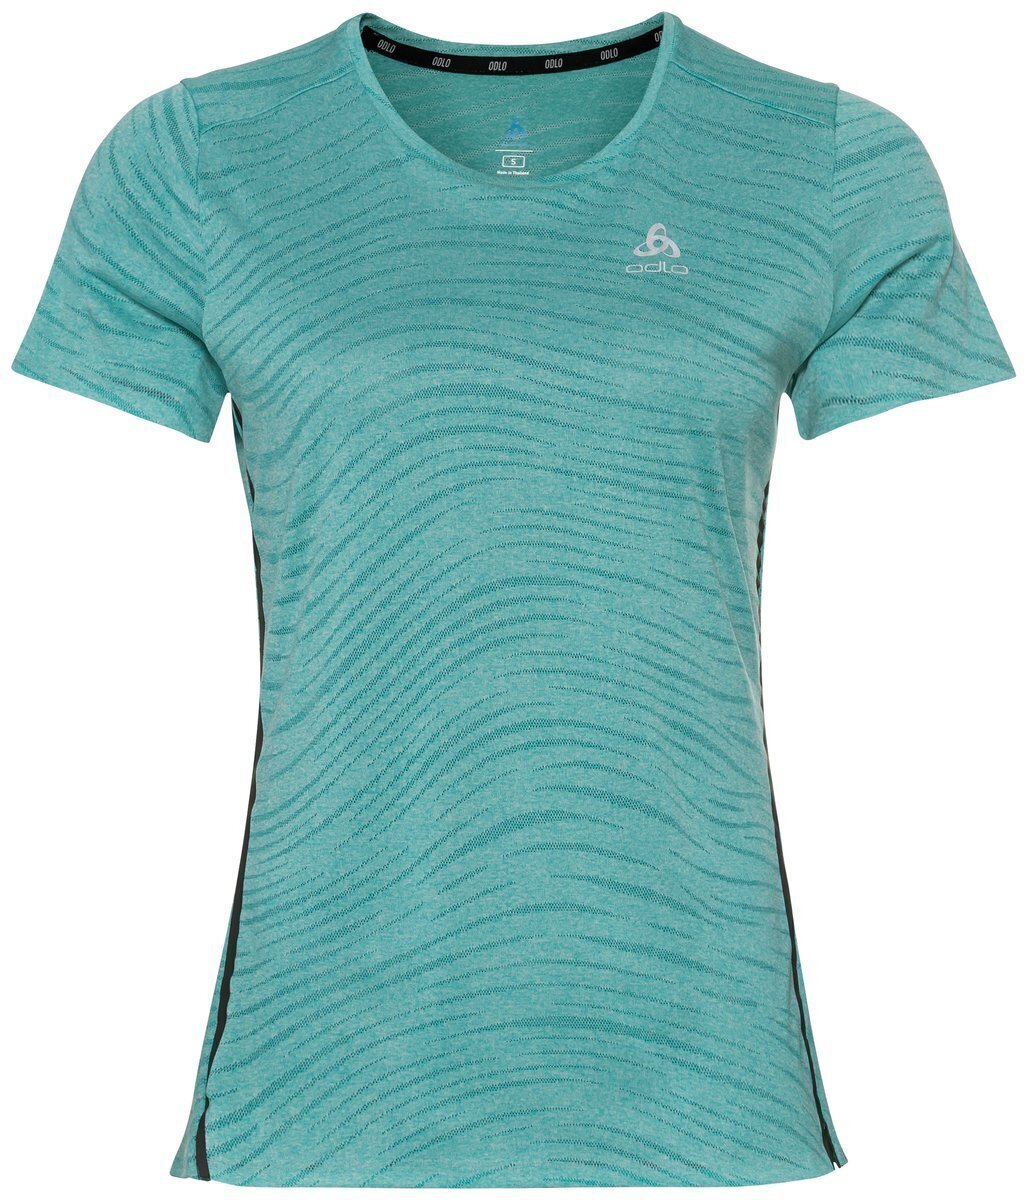 Running t-shirt with short sleeves
 Odlo Zeroweight Engineered Chill-Tec T-Shirt Jaded Melange XS Running t-shirt with short sleeves